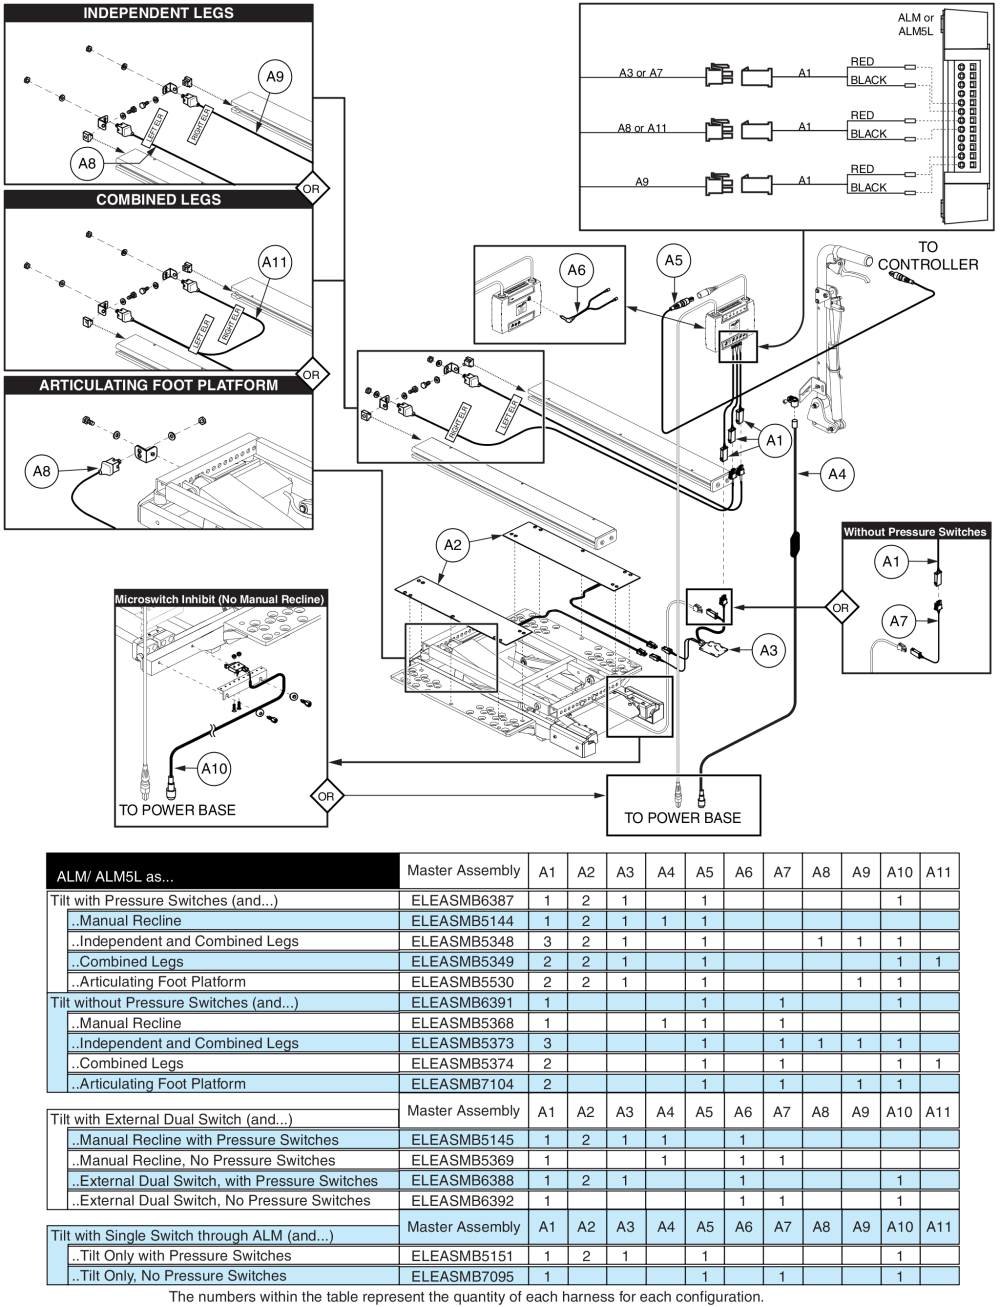 Remote Plus, Alm-alm5l Harnesses parts diagram